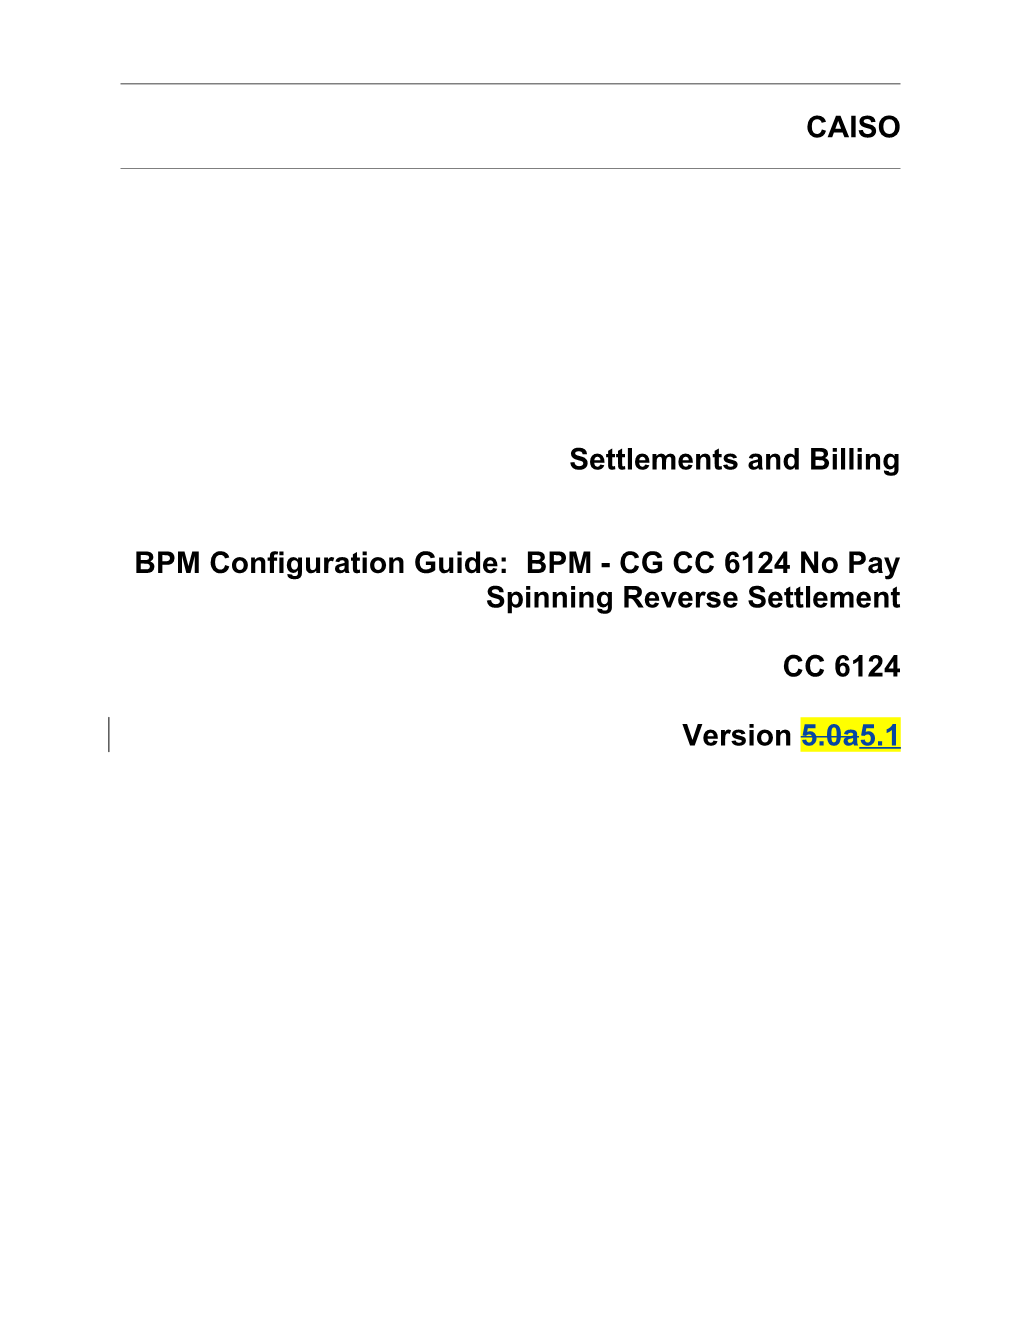 BPM - CG CC 6124 No Pay Spinning Reverse Settlement